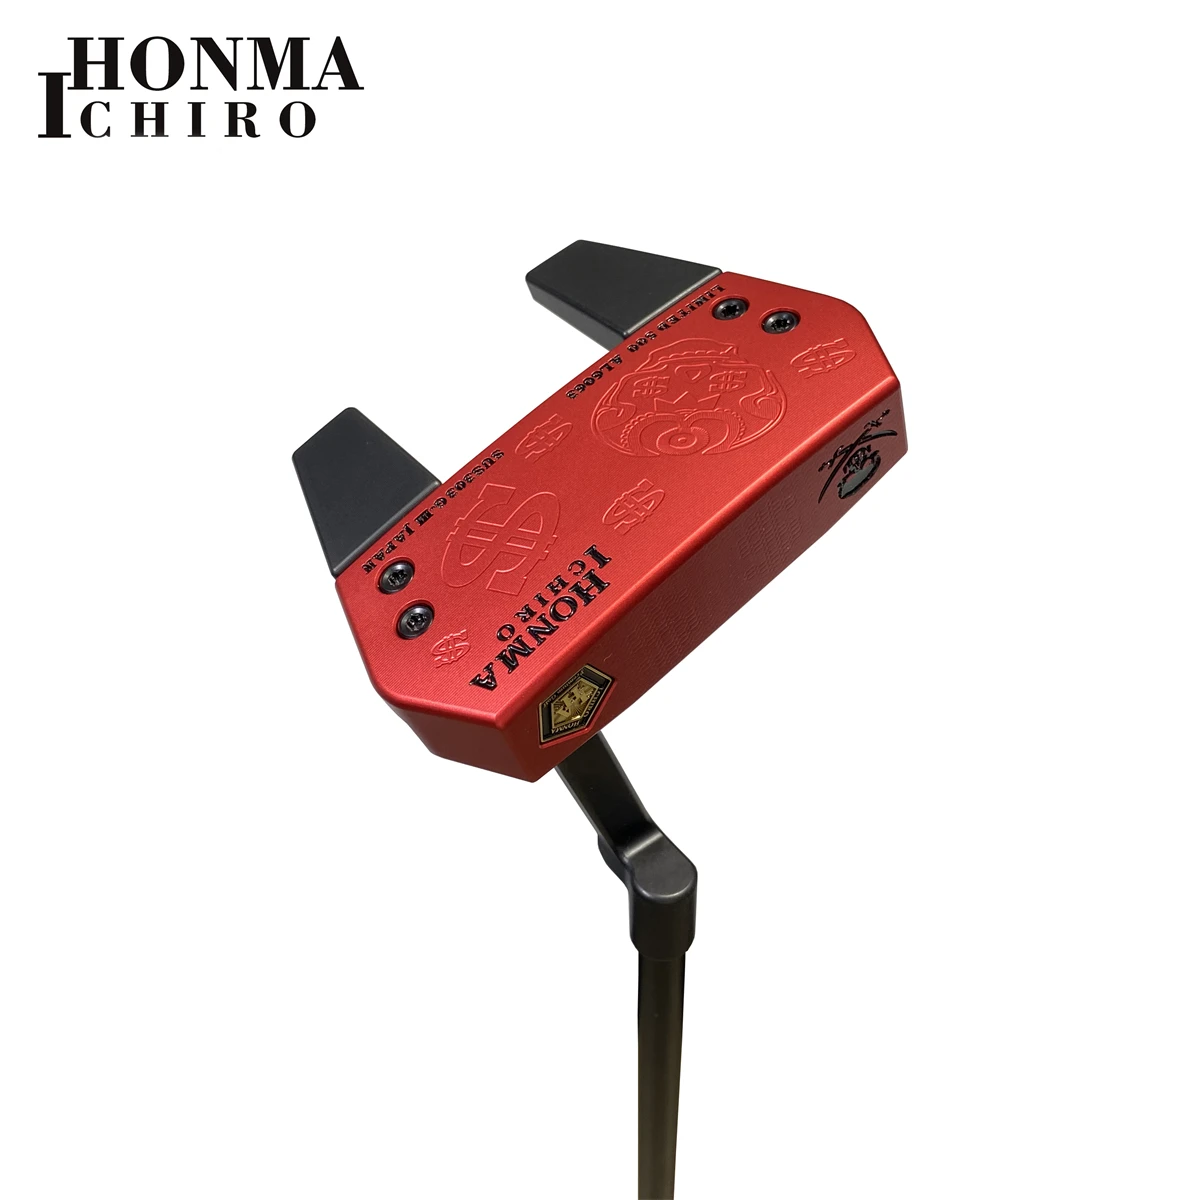 

Original Ichiro Honma Spider Goblin Golf Putter CNC Fine Milling Putters Black Steel Shaft Free Shipping